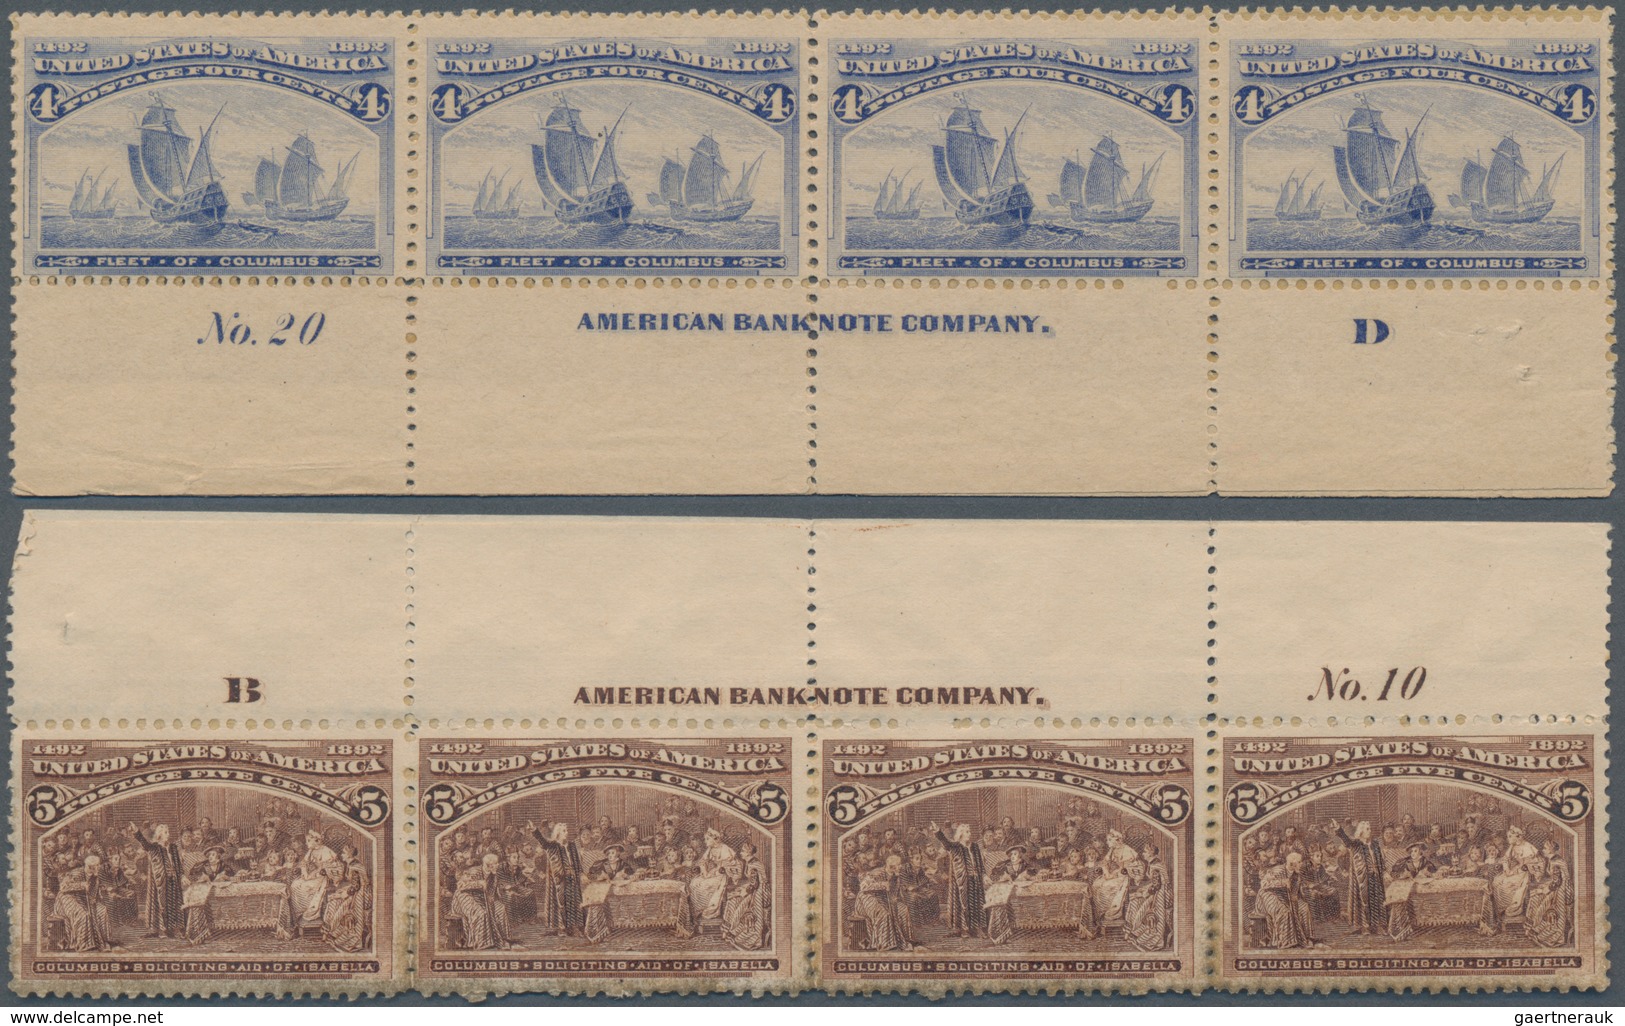 Vereinigte Staaten von Amerika: Columbian Issue plate no. and imprint strips of four, 2c (7), 3c, 4c